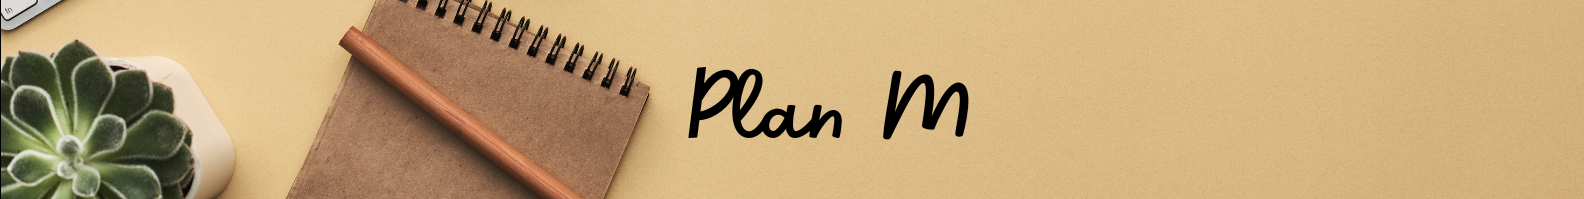 Plan M's profile banner